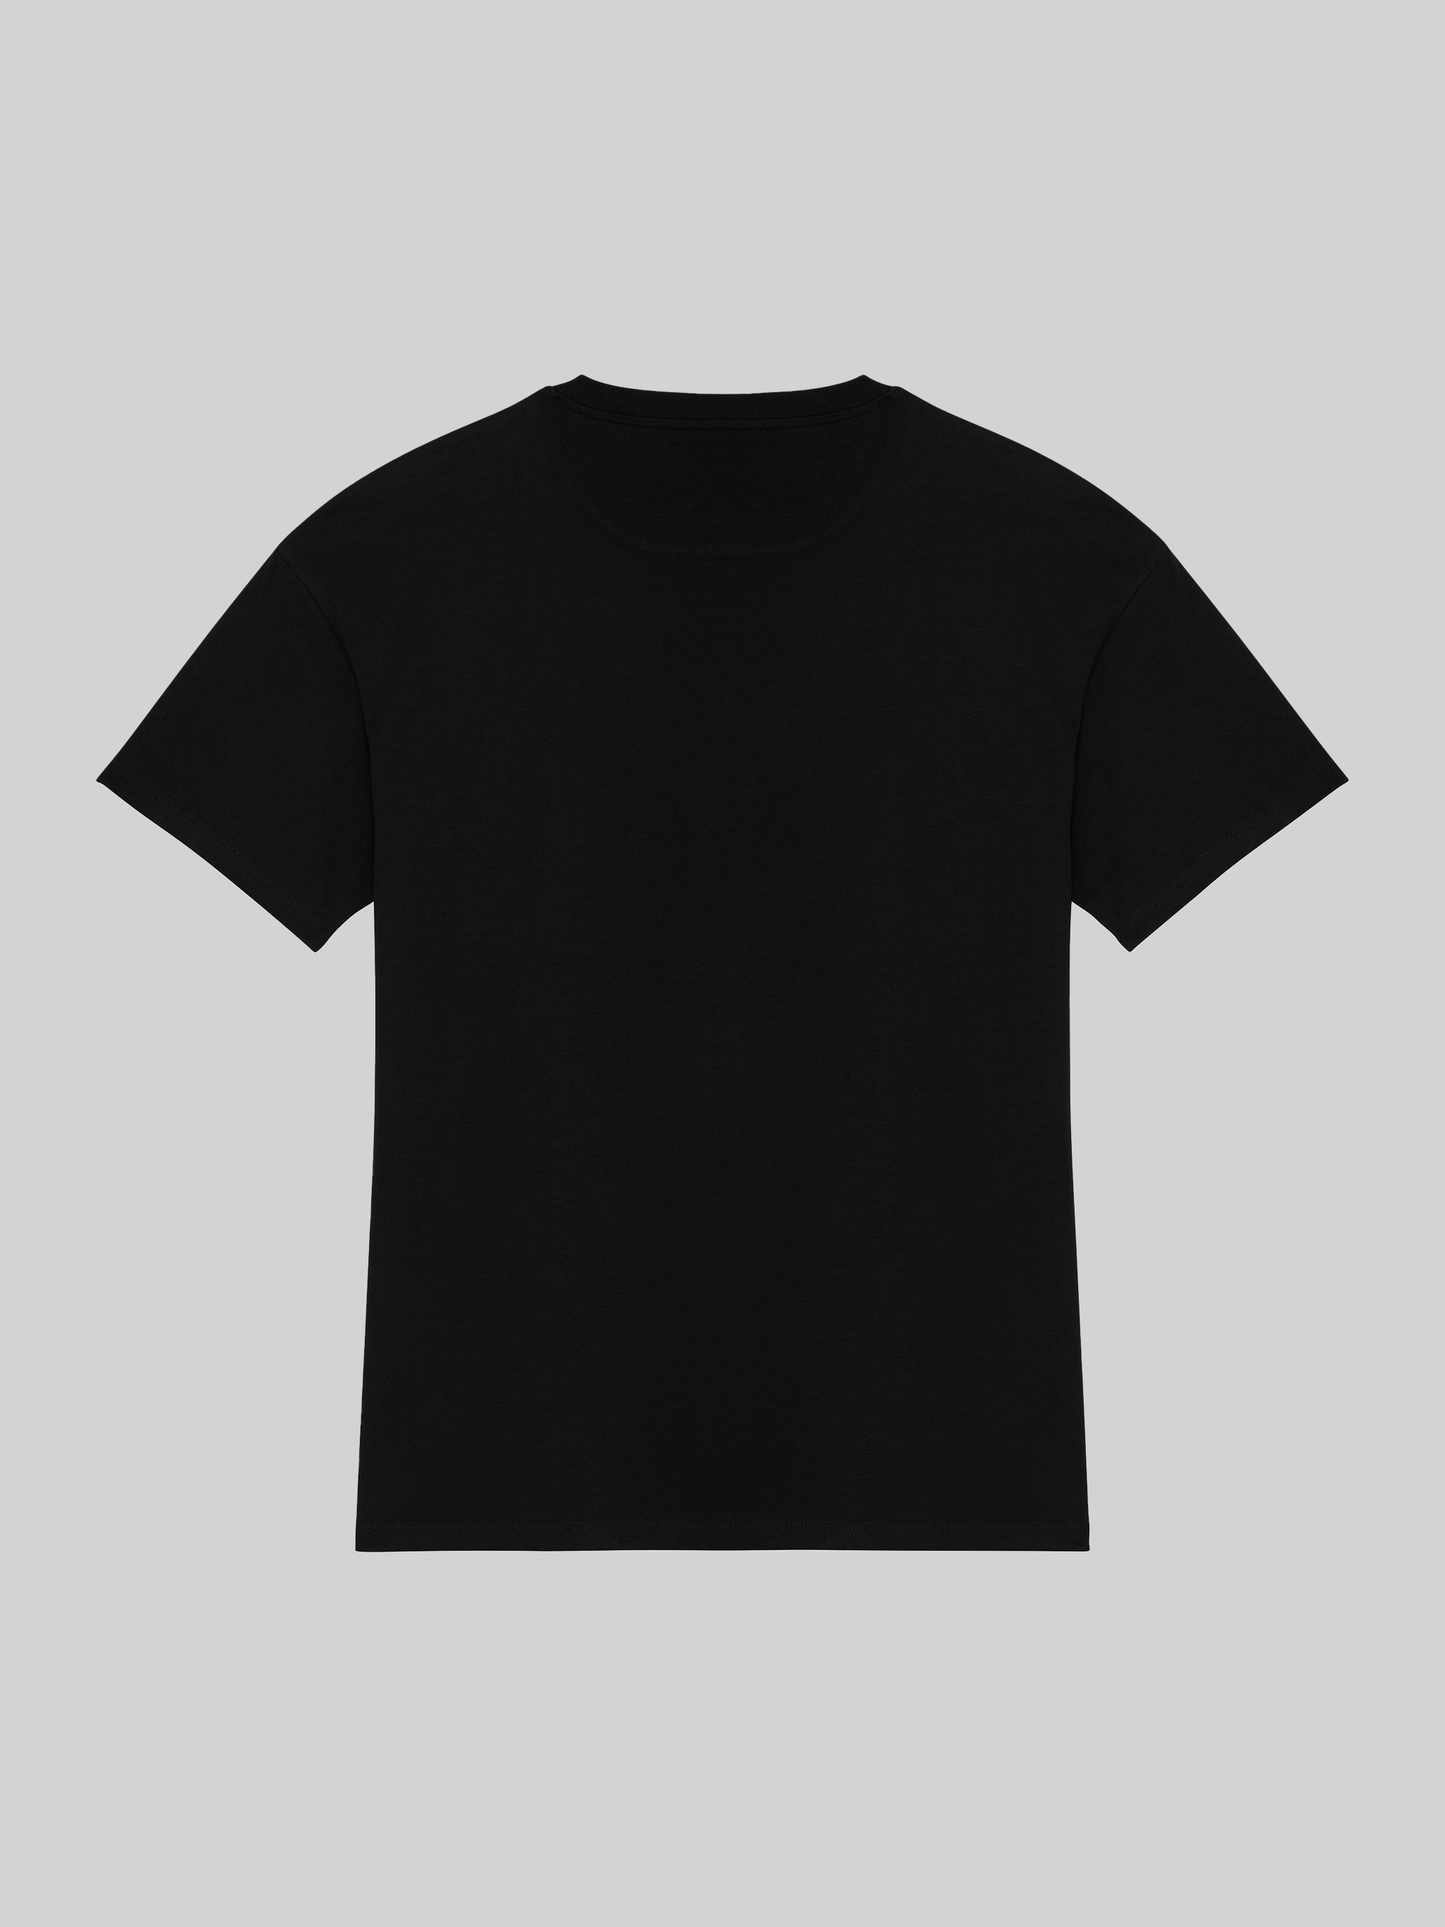 RaveFit Origins’ – Oversized T-Shirt Heren